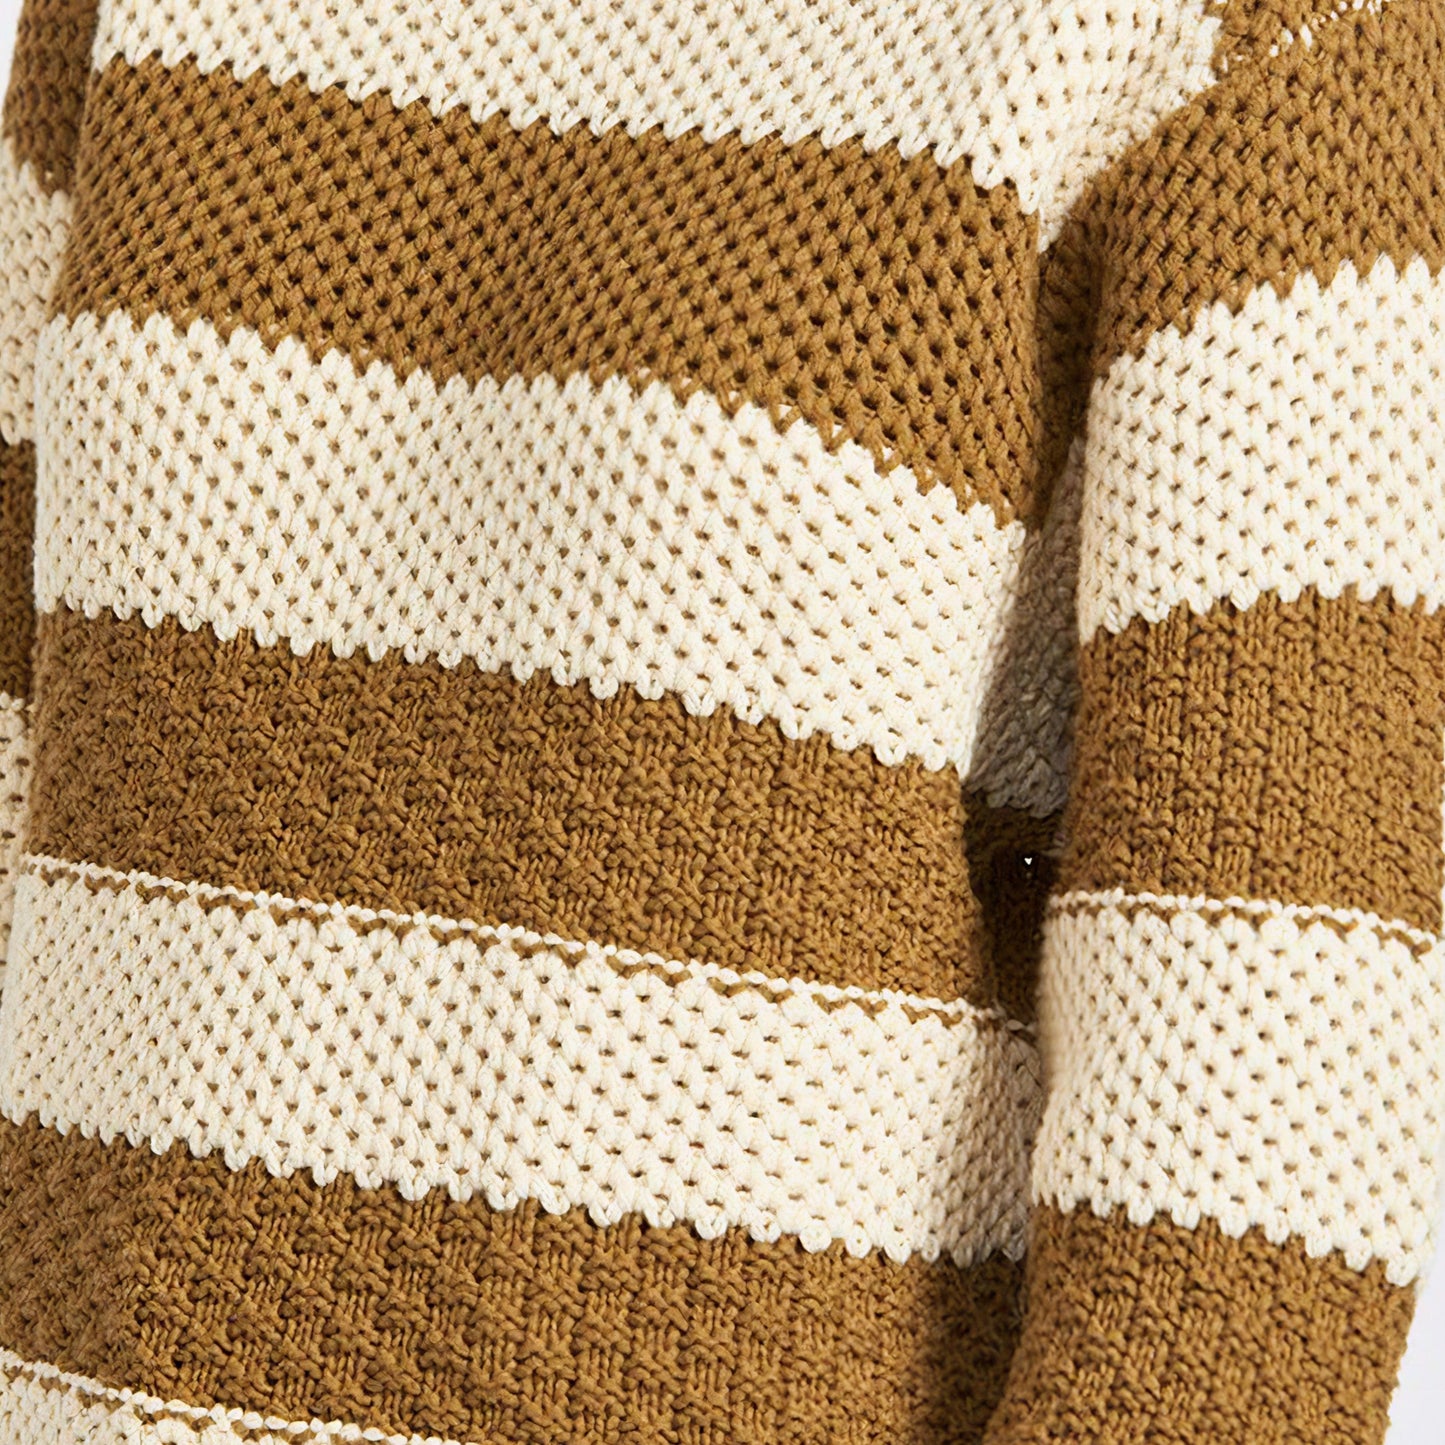 Nattie Striped Sweater